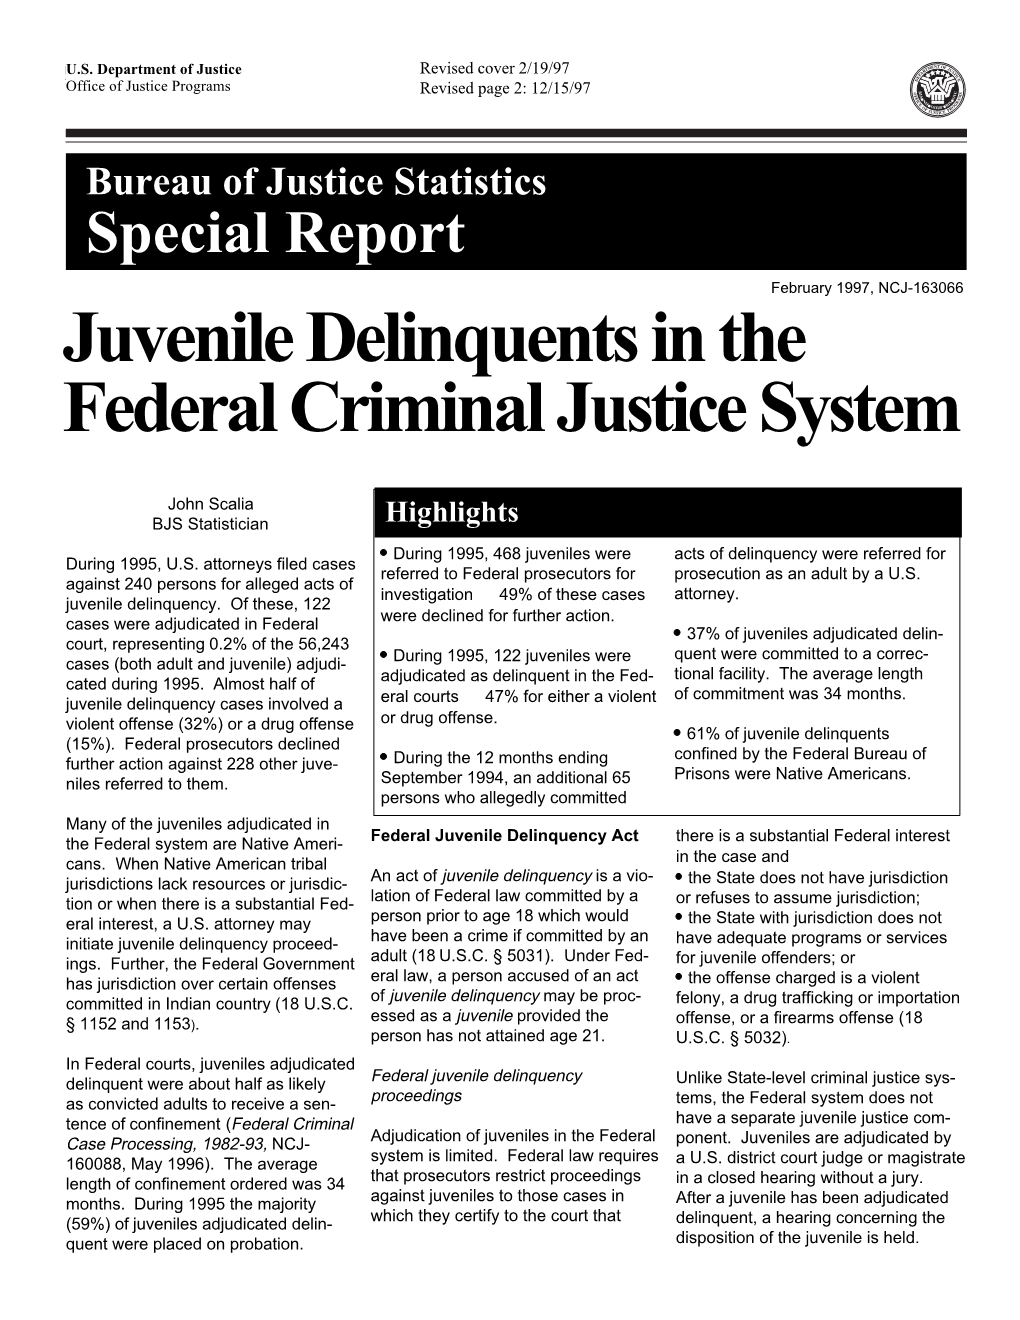 Juvenile Delinquents in Federal Criminal Justice System